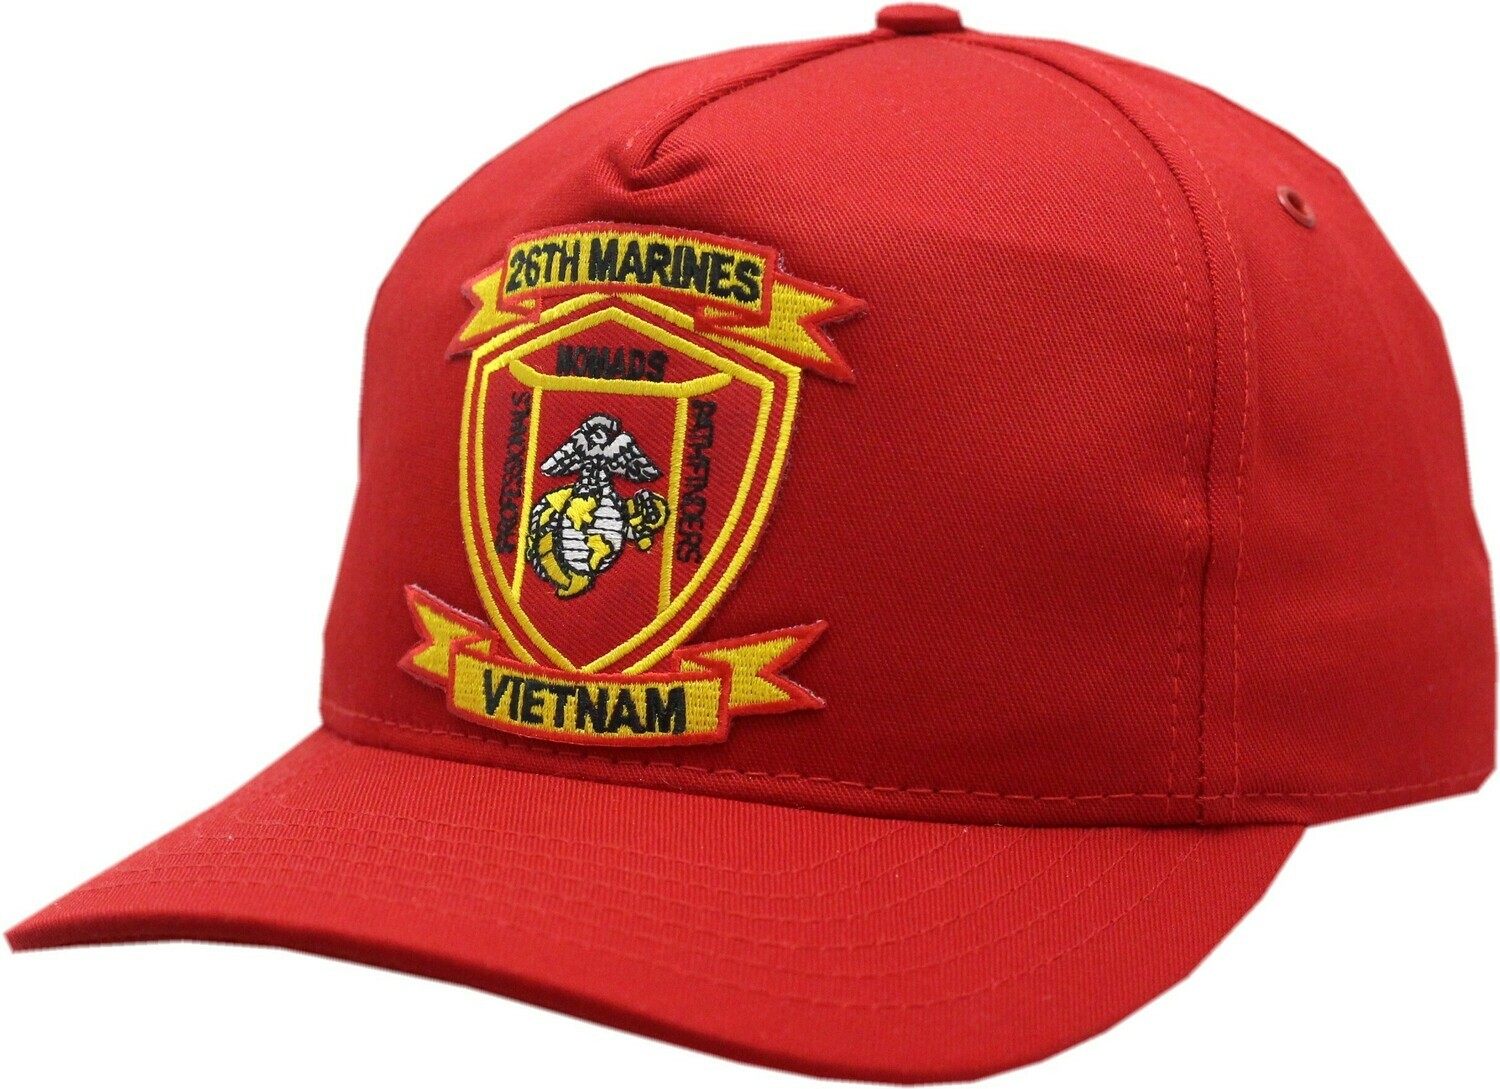 Khe Sanh 26th Marines Vietnam Structured Cotton Cap Red